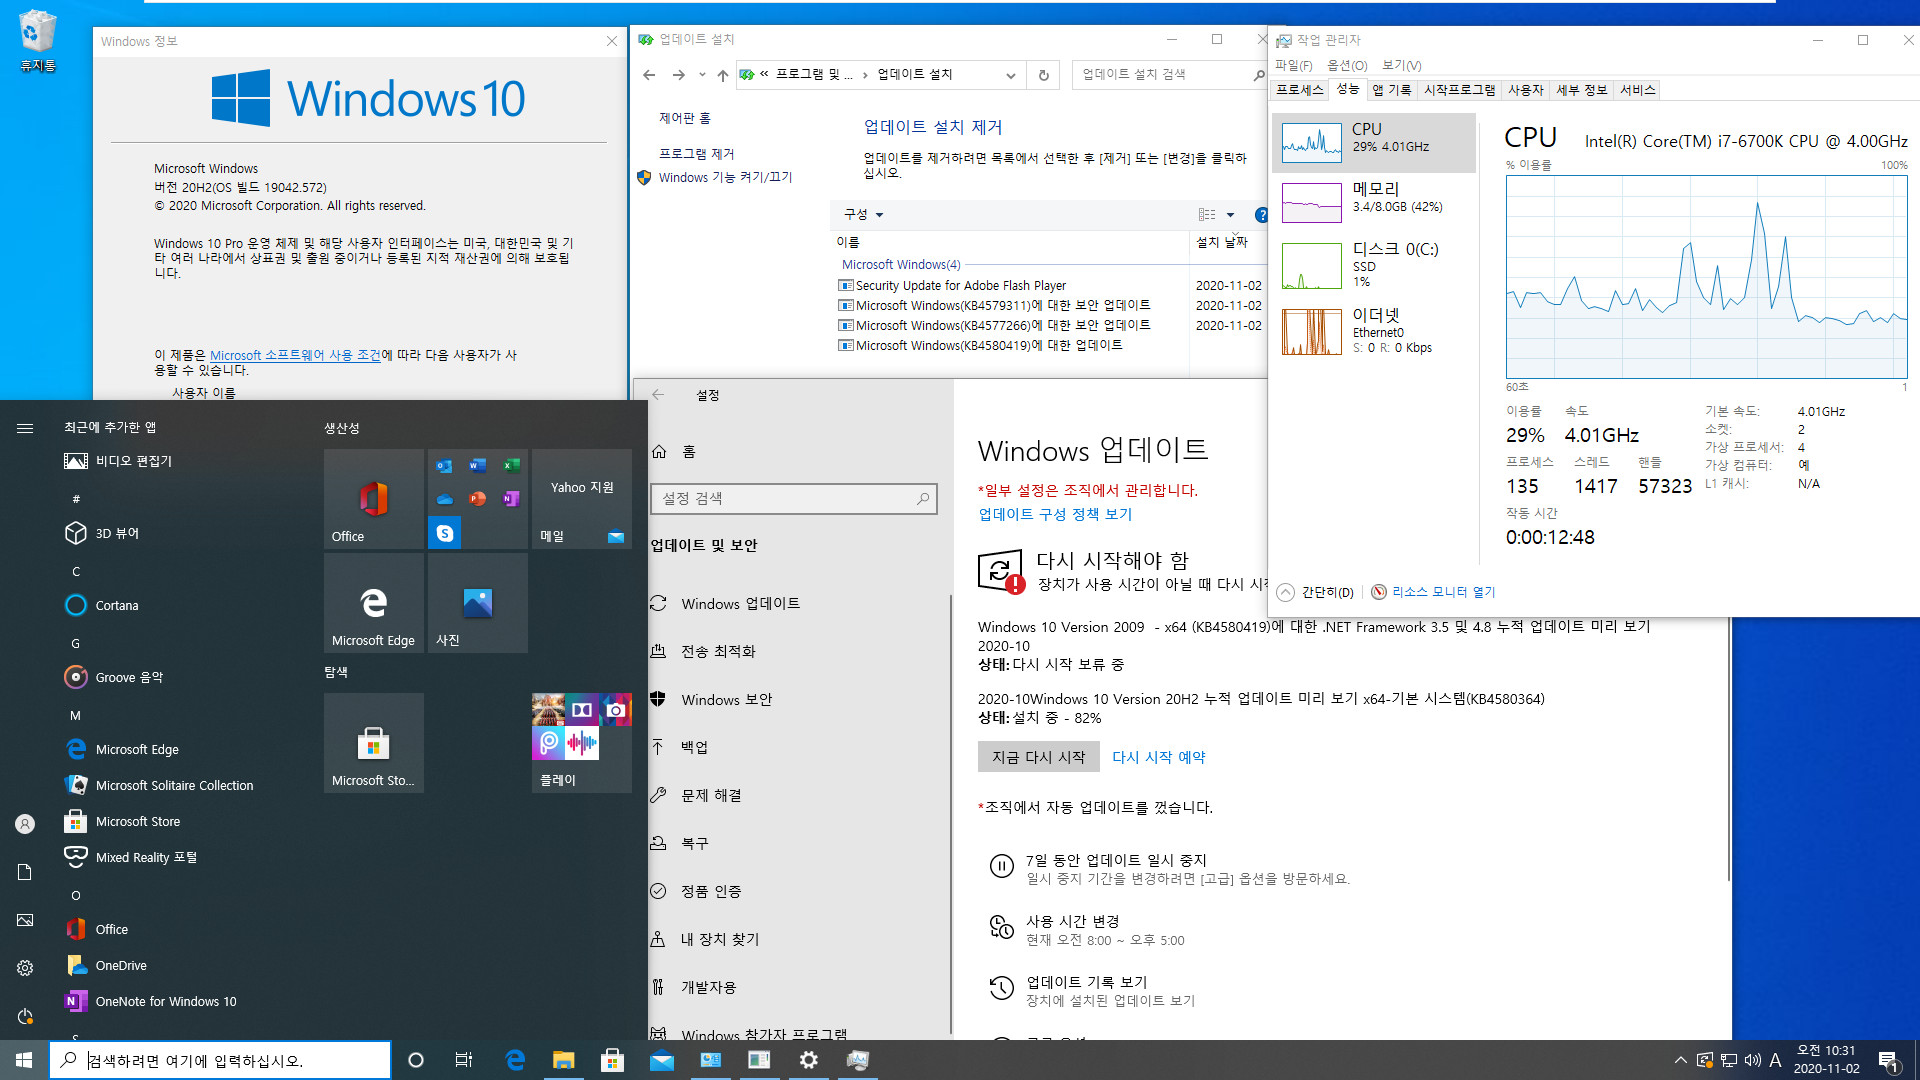 Windows 10 버전 20H2 기능 업데이트 KB4562830 폴더의 mum 파일들만 찾아서 설치하기.bat - 크로미엄 엣지 설치하지 않고 버전 20H2만 설치하기 테스트 - 뻘짓했네요 2020-11-02_103146.jpg